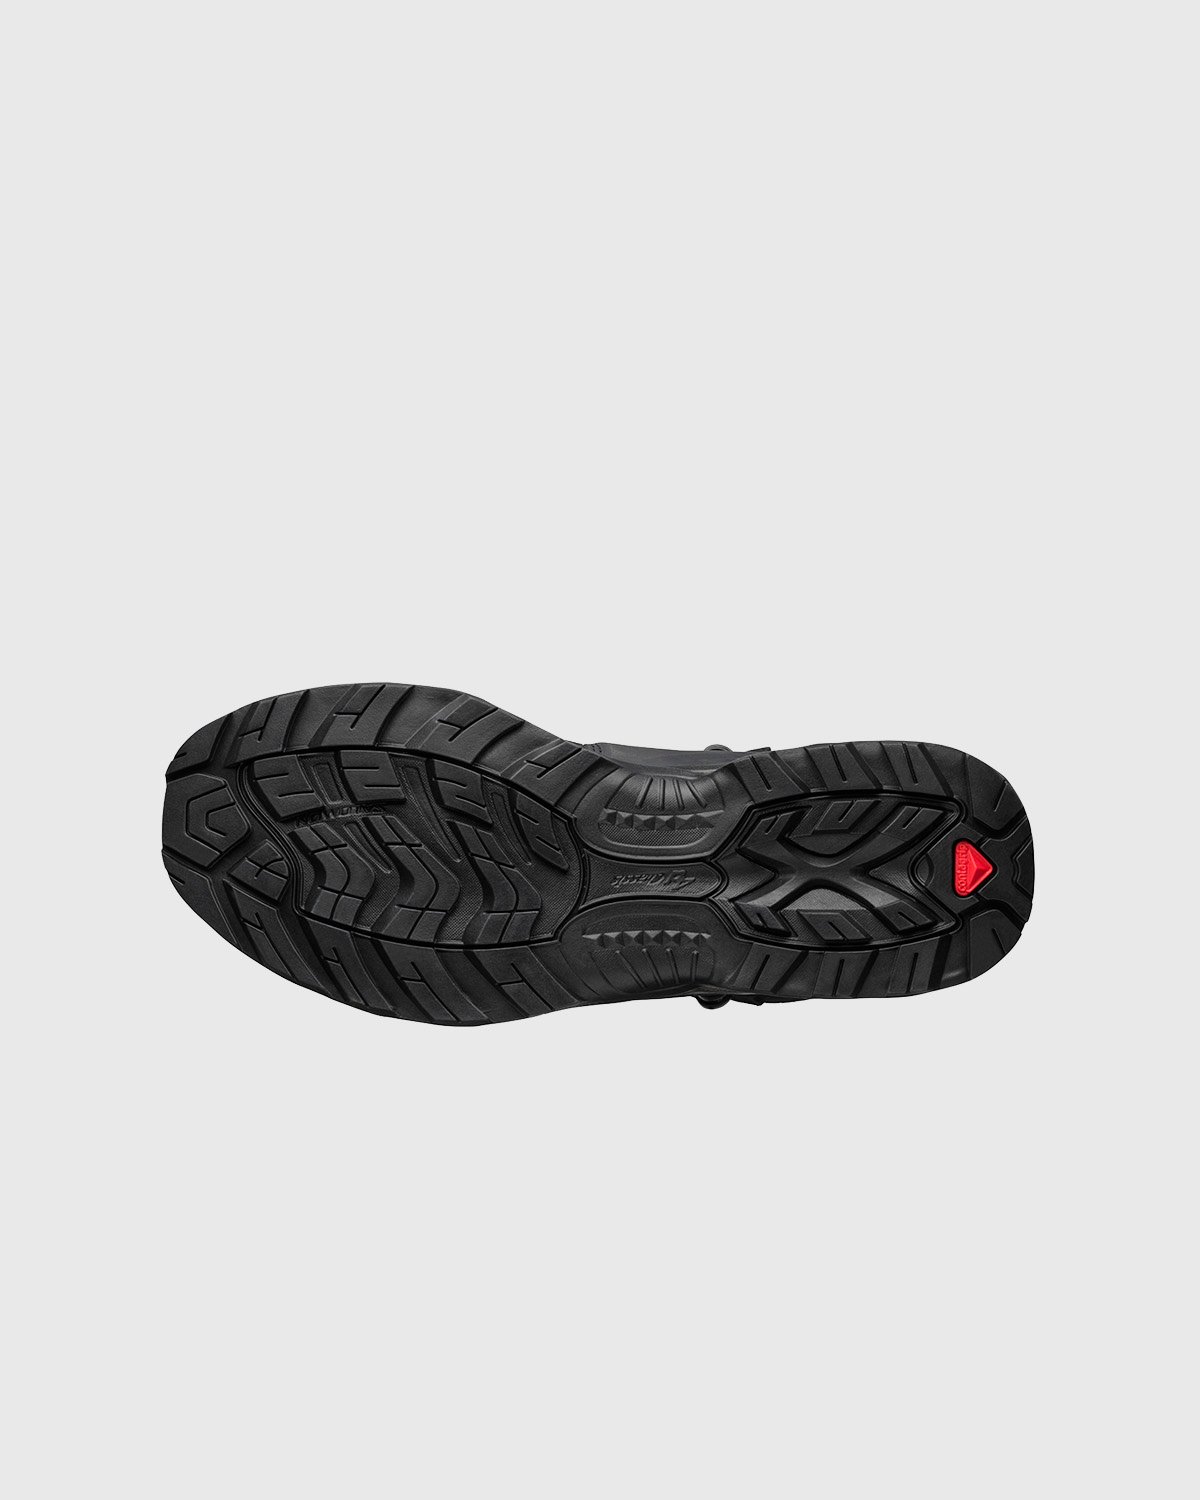 Salomon - Quest 4D GTX Advanced Black - Footwear - Black - Image 5